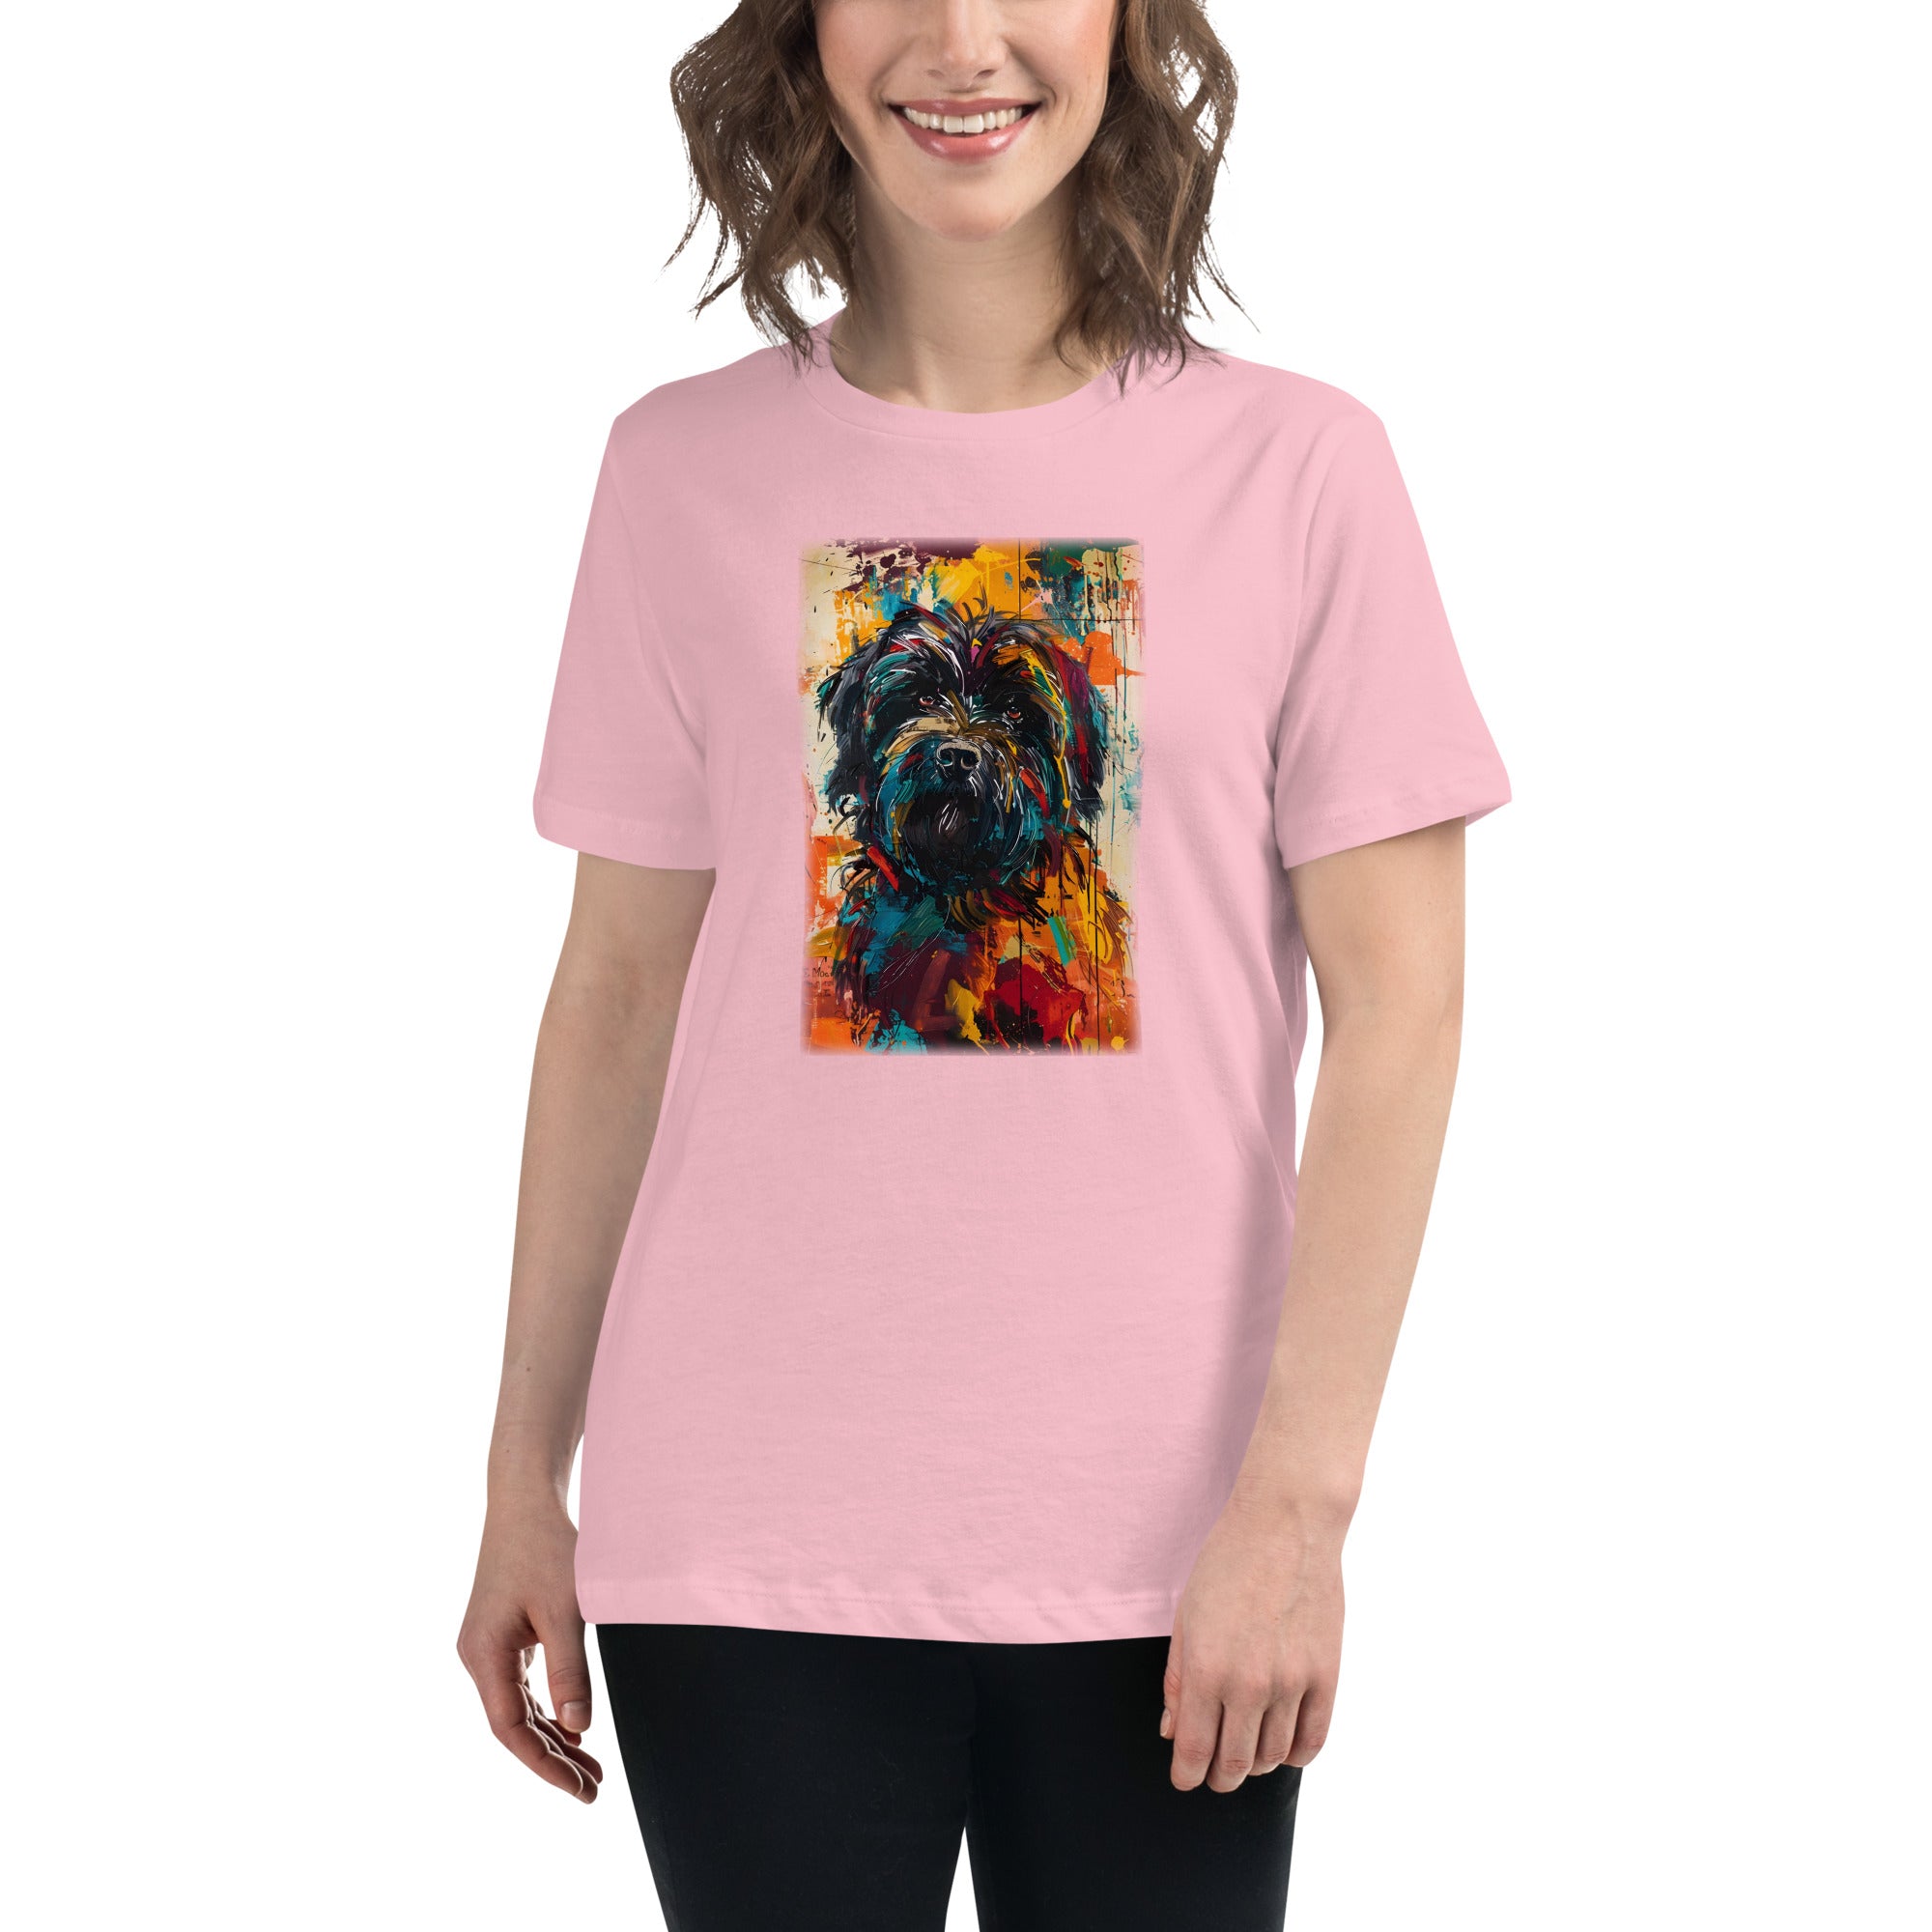 Bergamasco Sheepdog Women's Relaxed T-Shirt